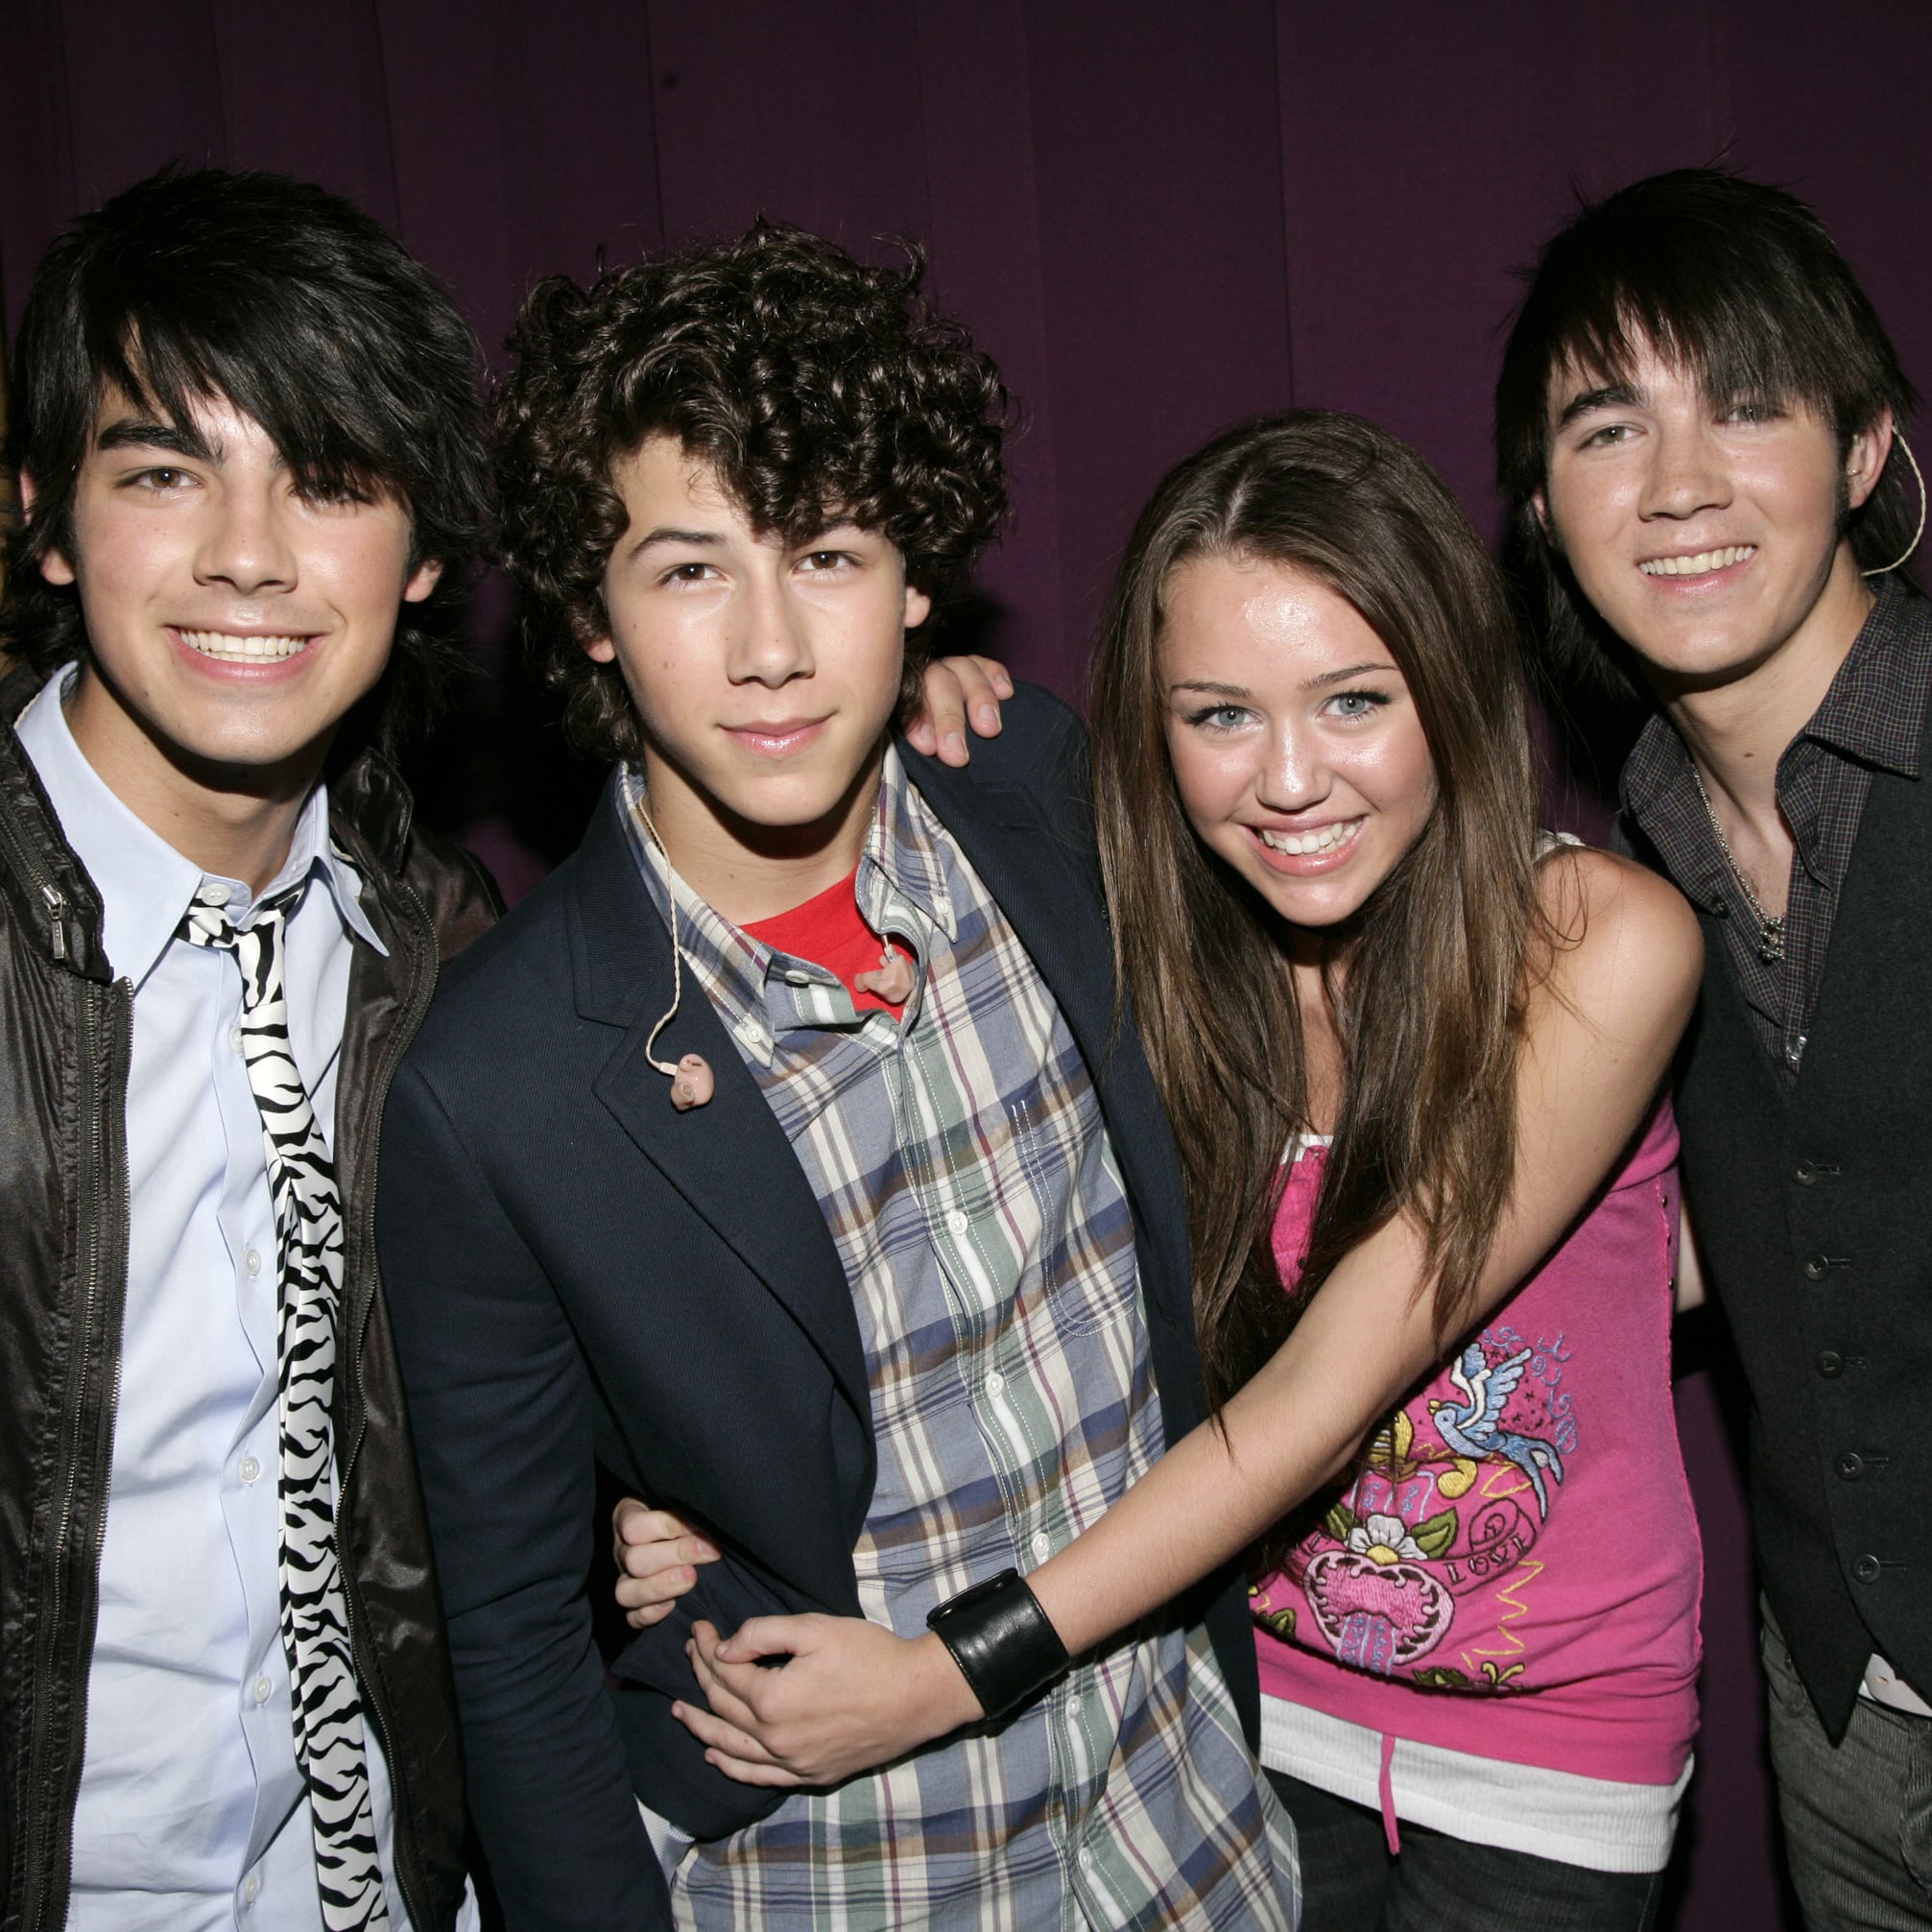 Nick Jonas and Miley Cyrus Relationship Timeline | POPSUGAR Celebrity